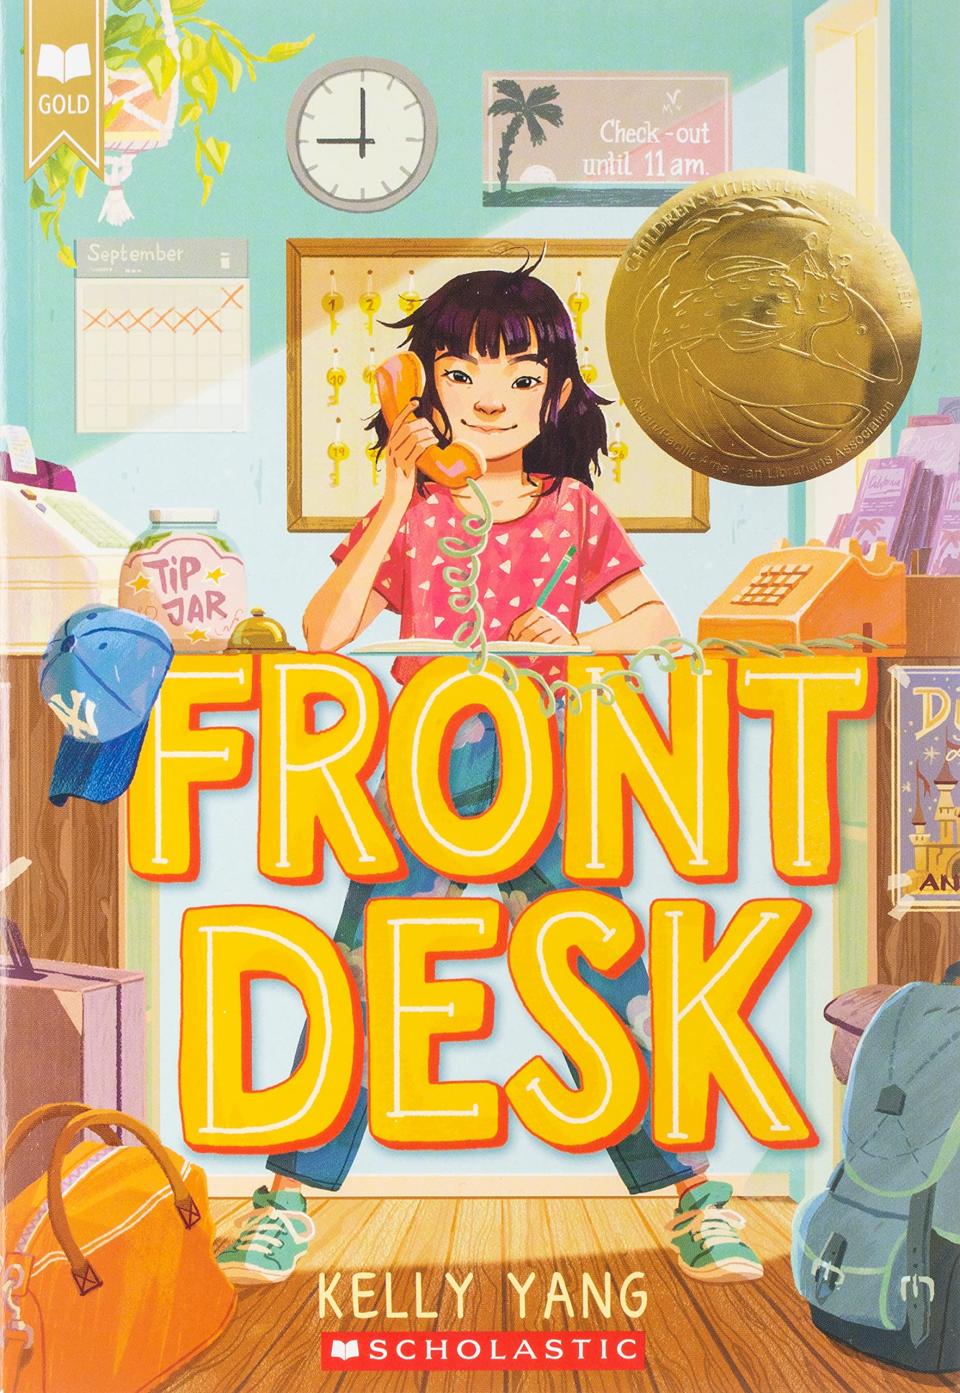 "Front Desk"